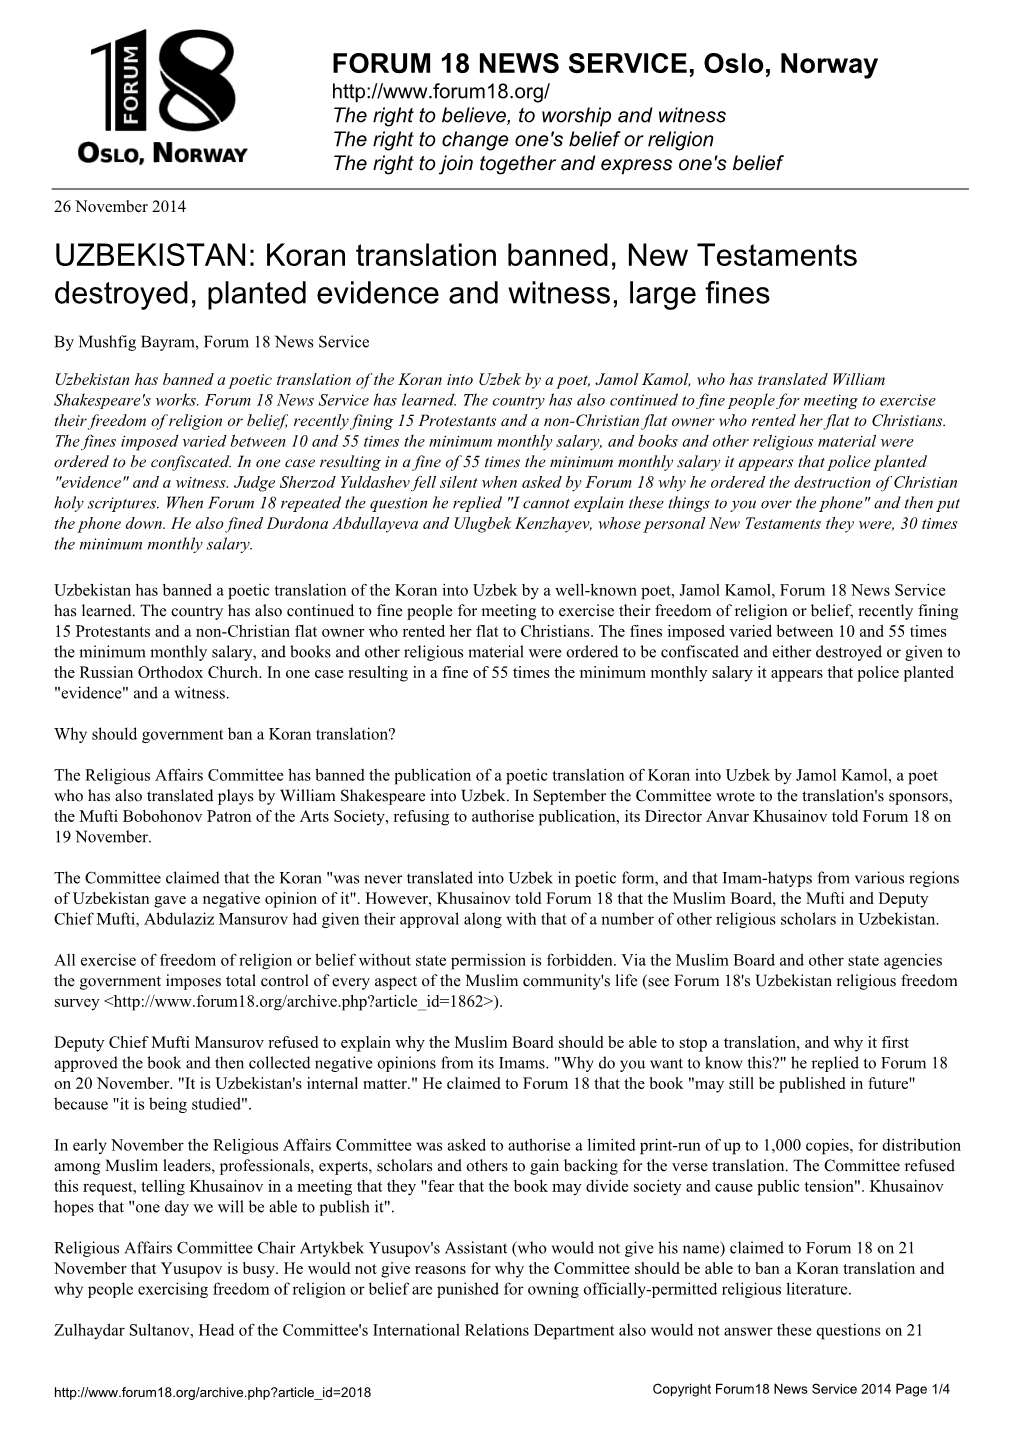 UZBEKISTAN: Koran Translation Banned, New Testaments Destroyed, Planted Evidence and Witness, Large Fines